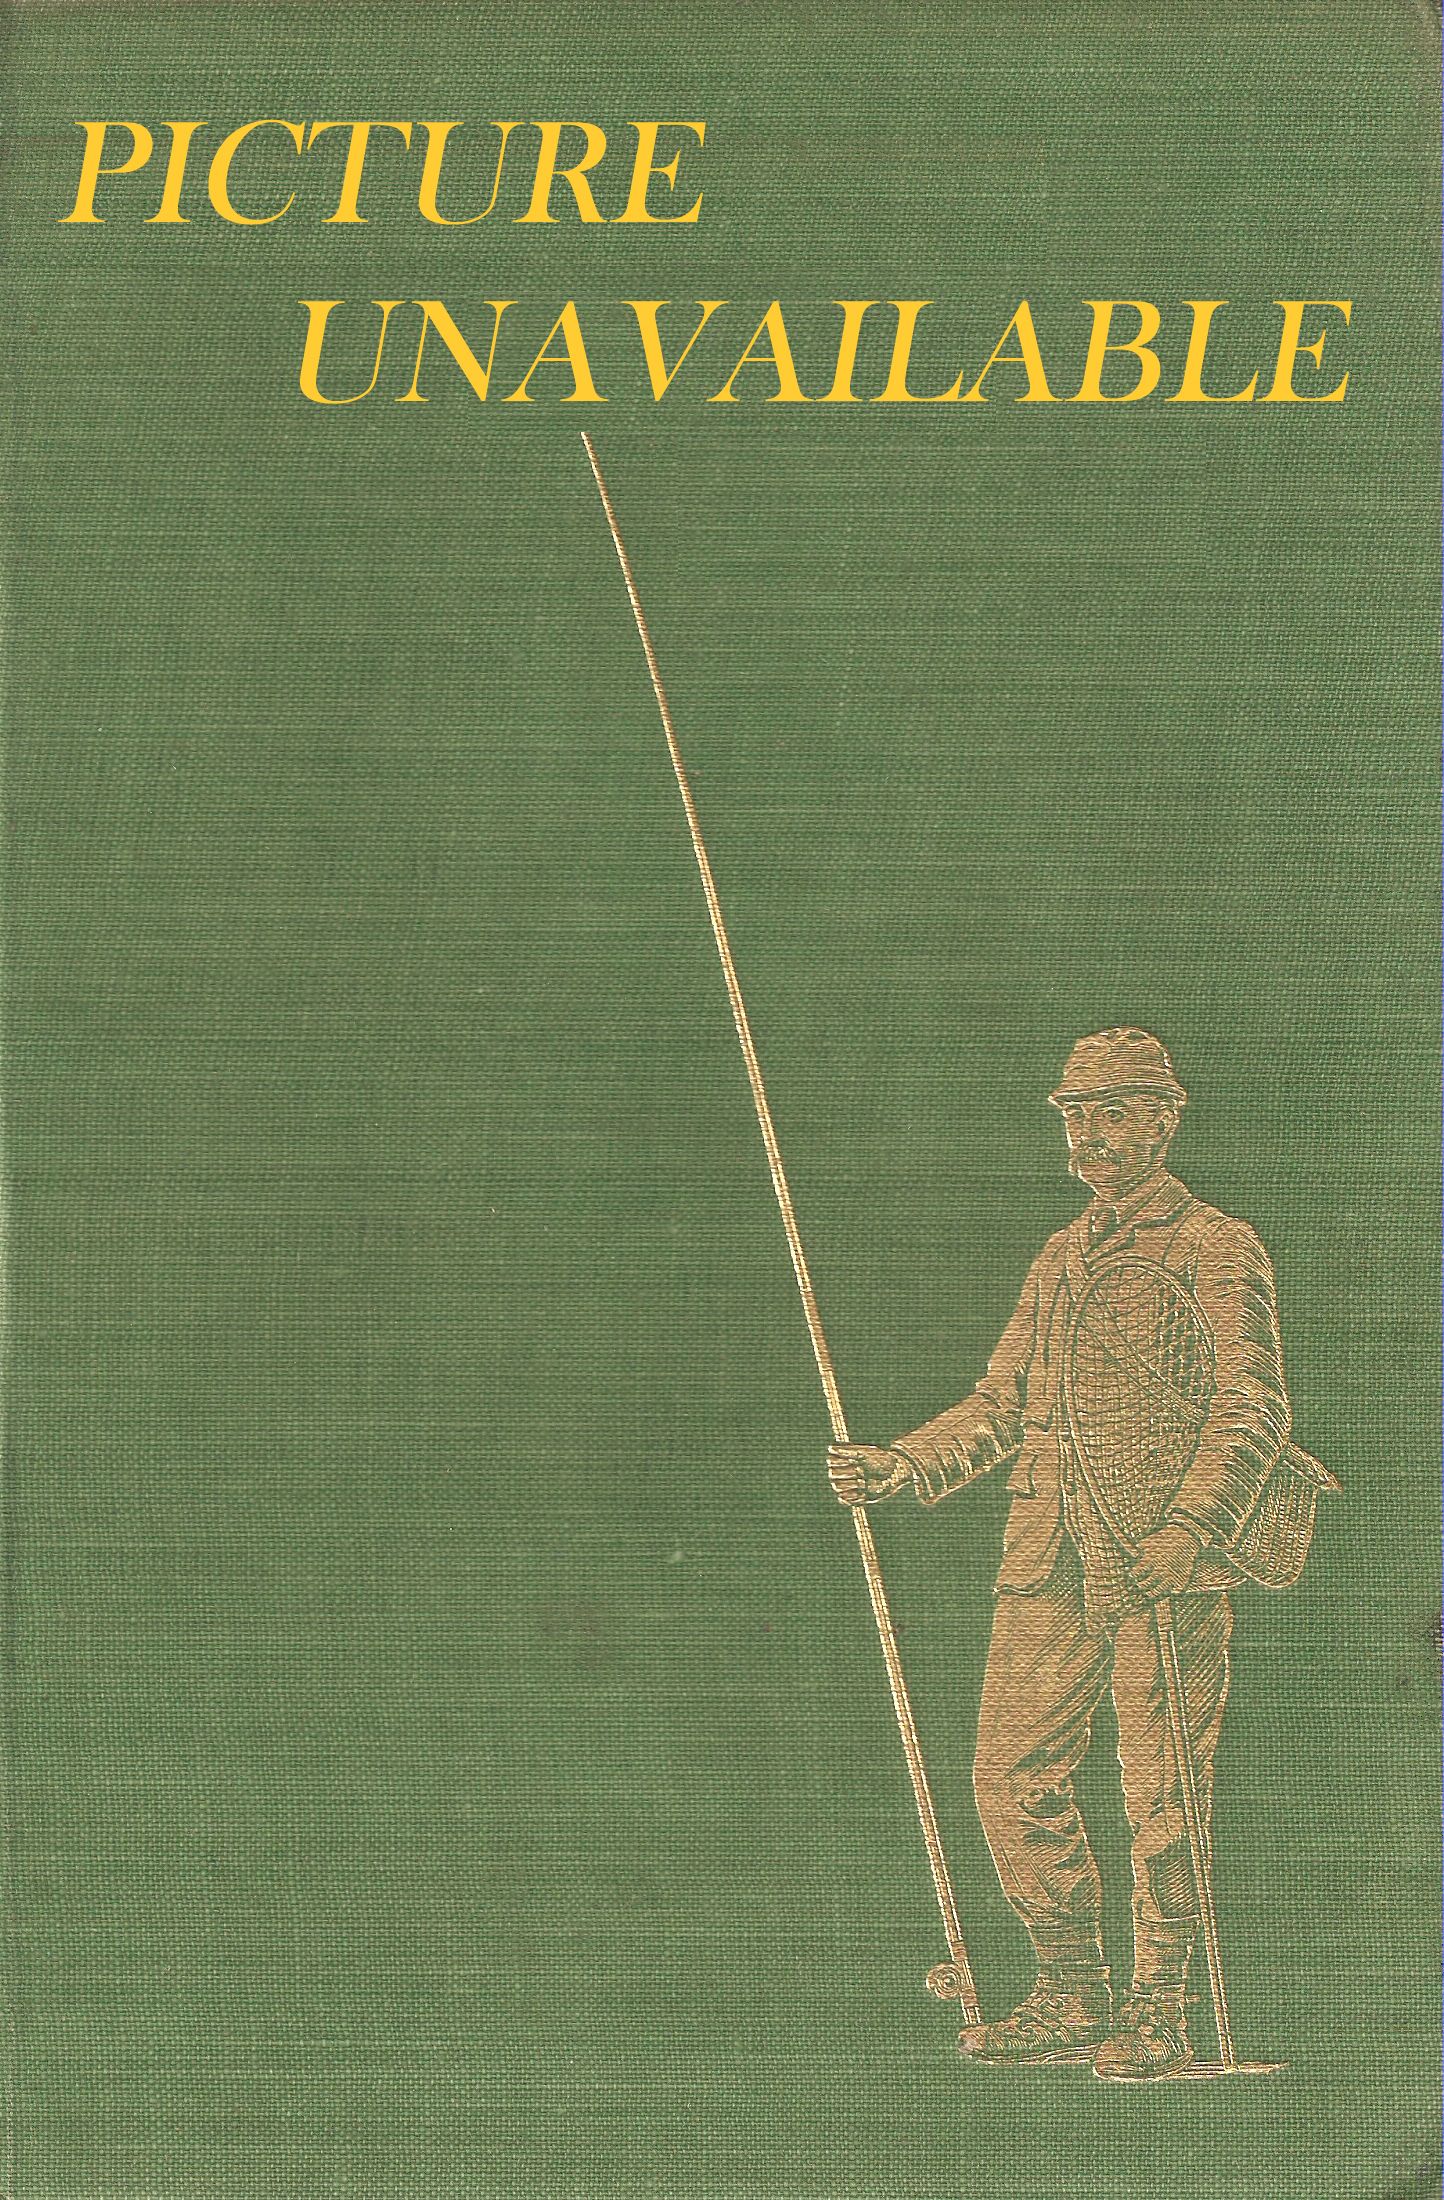 CREEL: A FISHING MAGAZINE. Volume 4, number 8. February 1967.